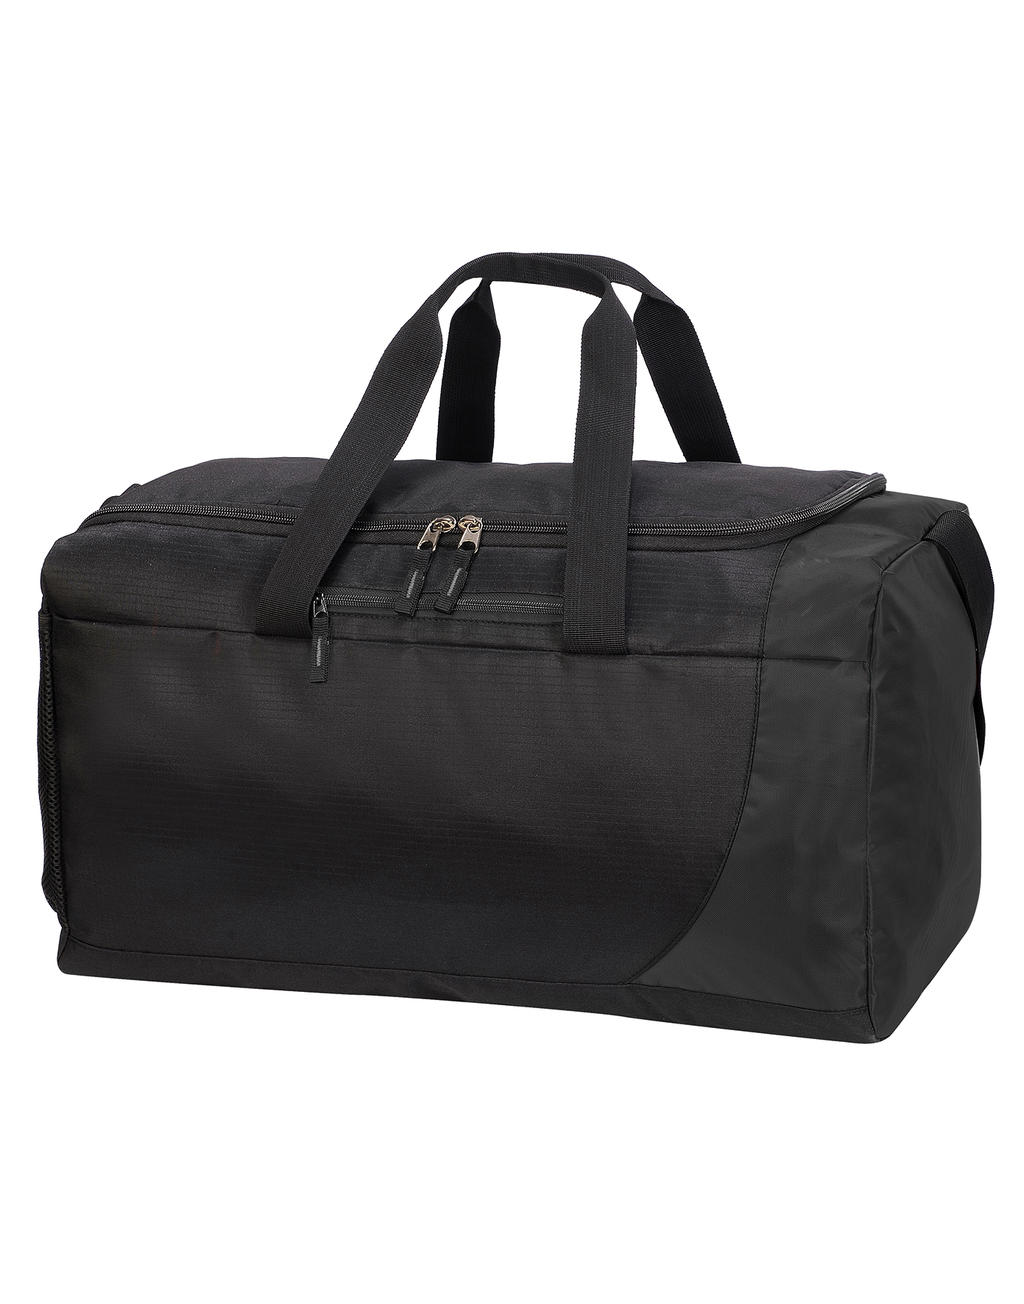  Naxos Sports Kit Bag in Farbe Black/Charcoal